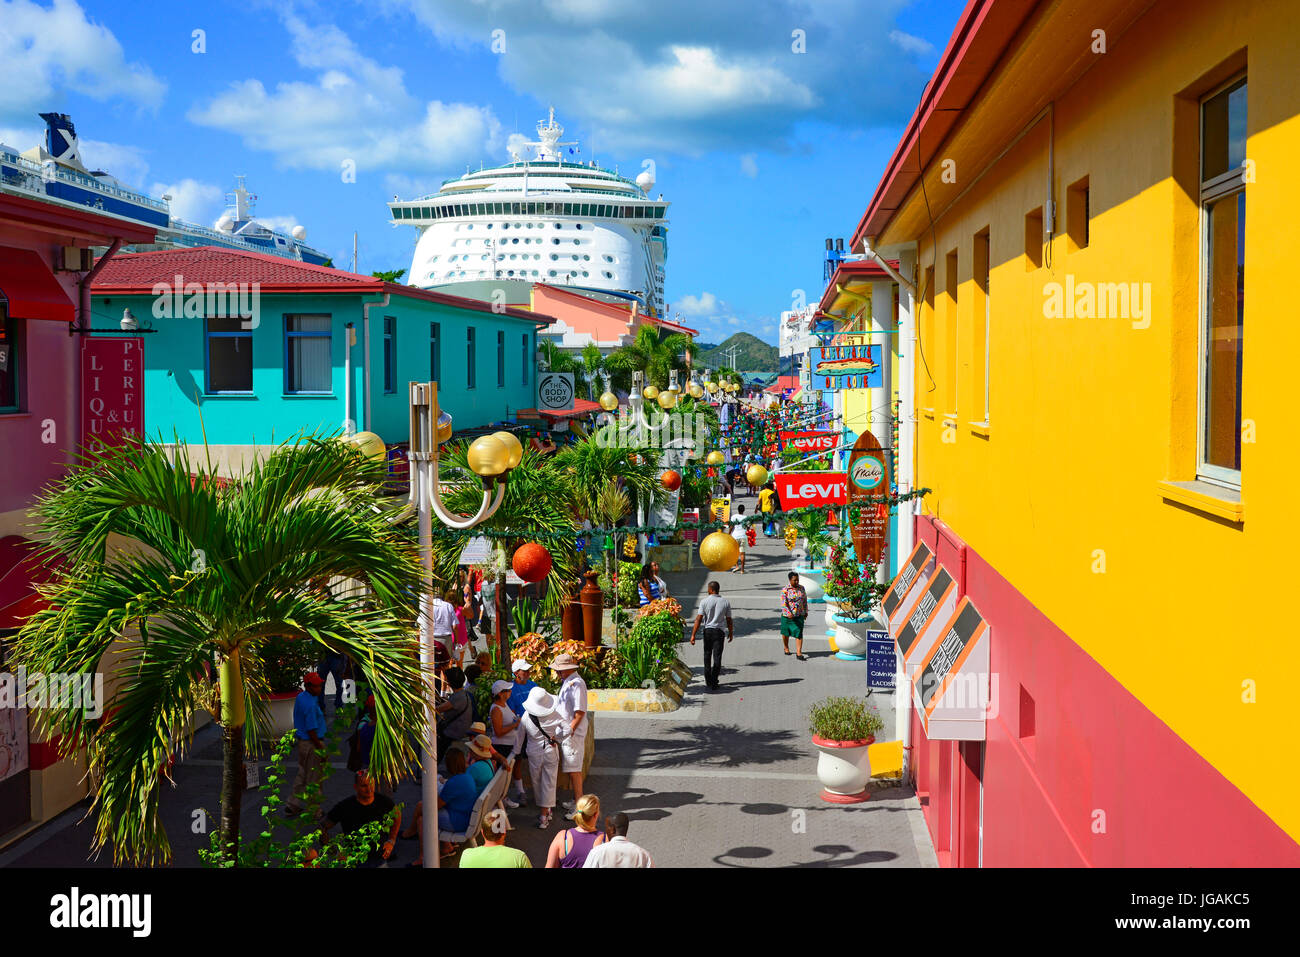 St Lucia Caribbean Cruise Celebrity line Island Vista Southern Caribbean Island Cruise from Miami Florida Stock Photo